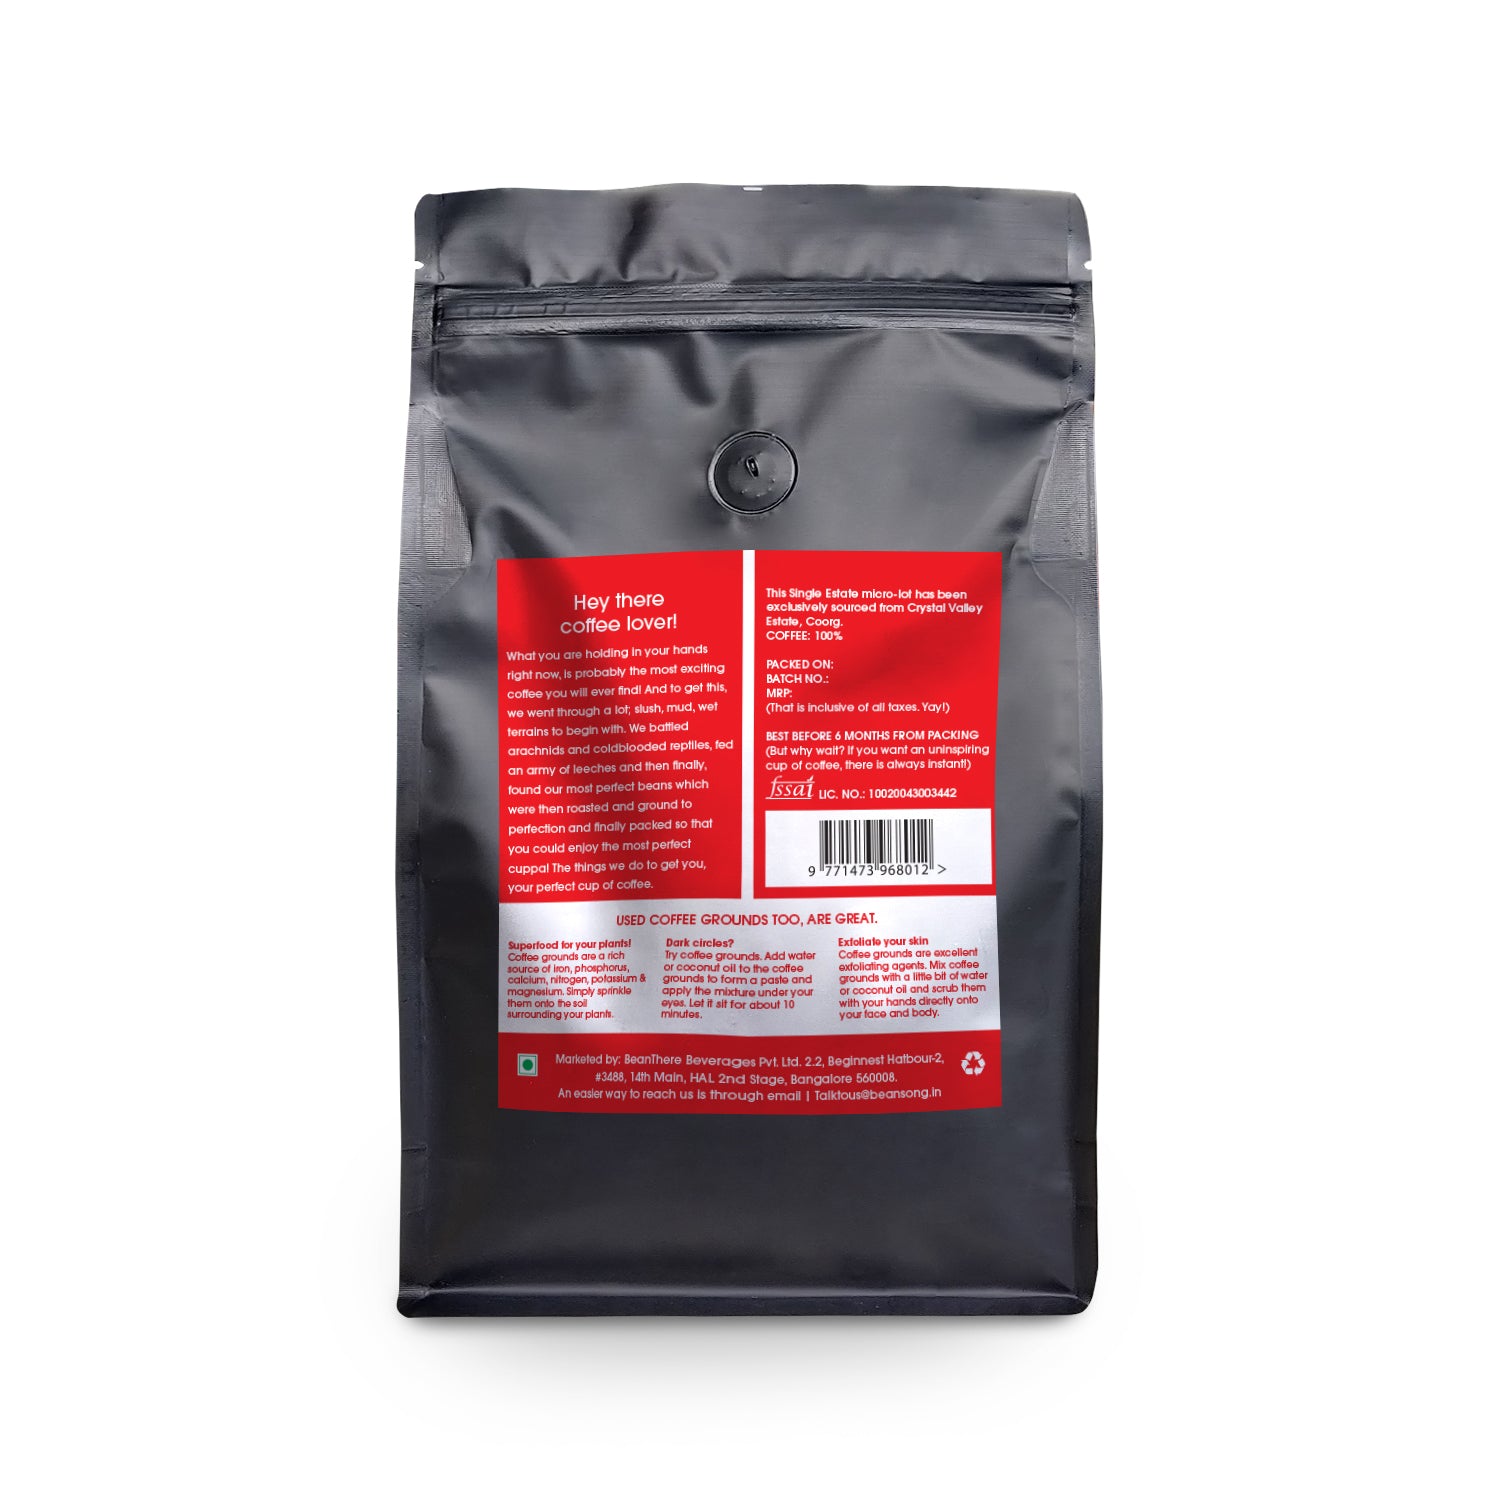 Red Honey Coffee - Powder(250g)